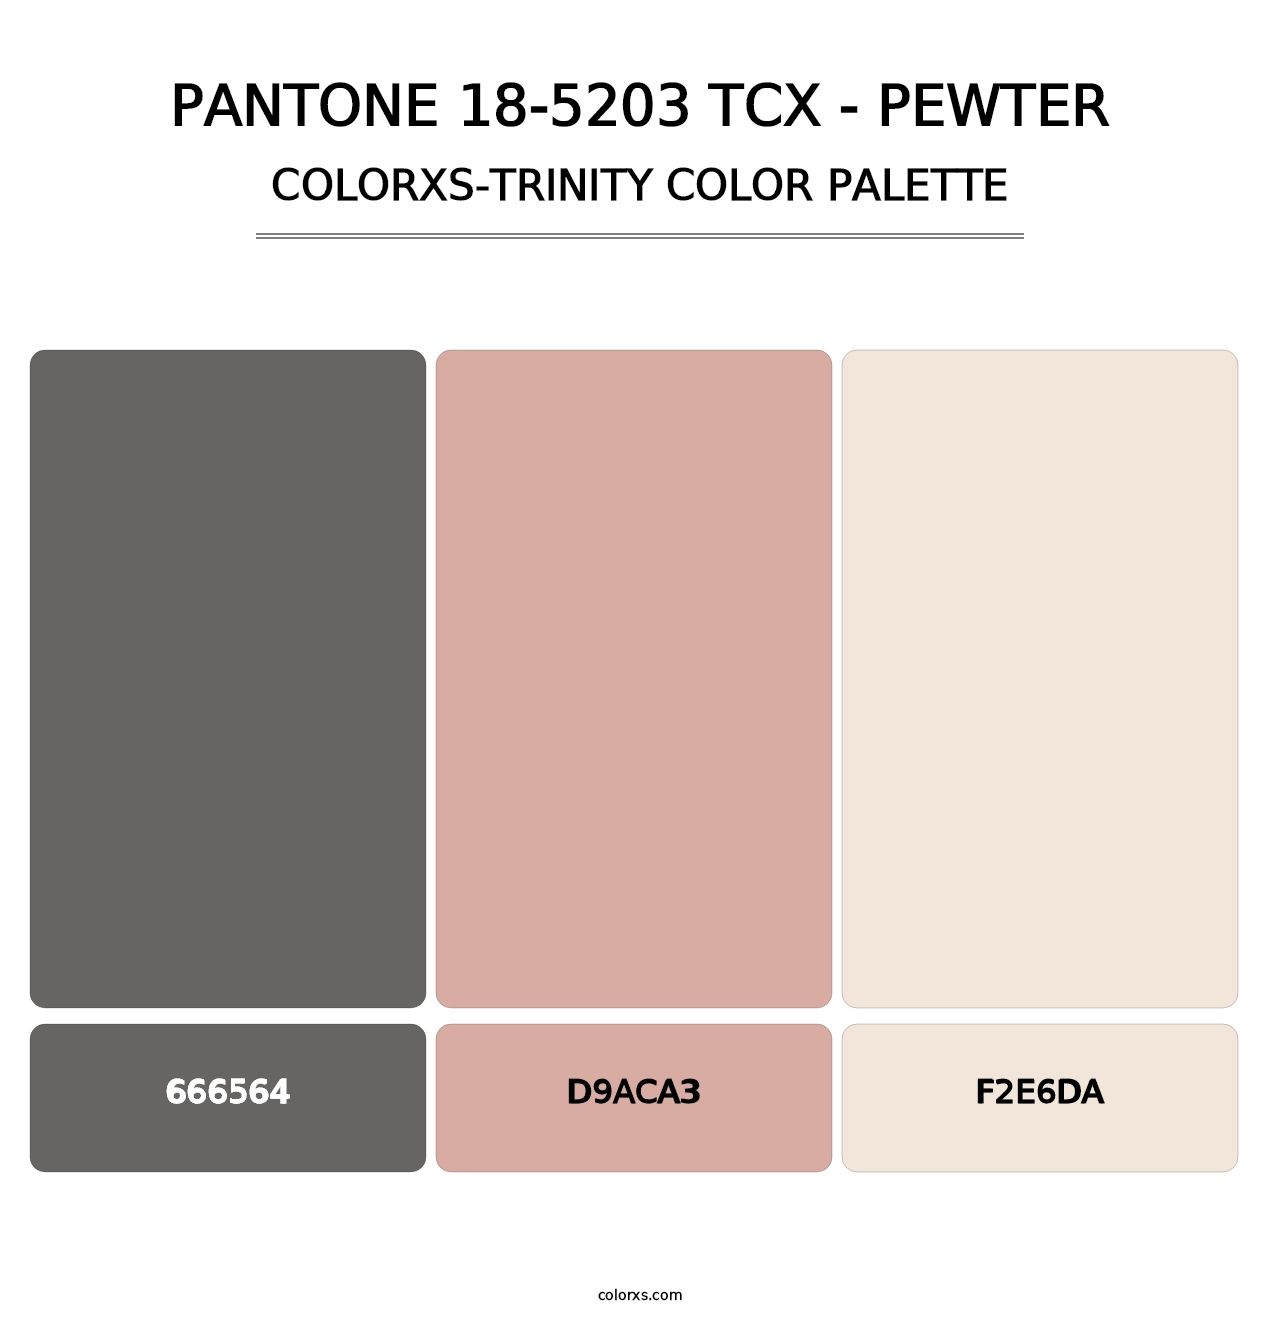 PANTONE 18-5203 TCX - Pewter - Colorxs Trinity Palette